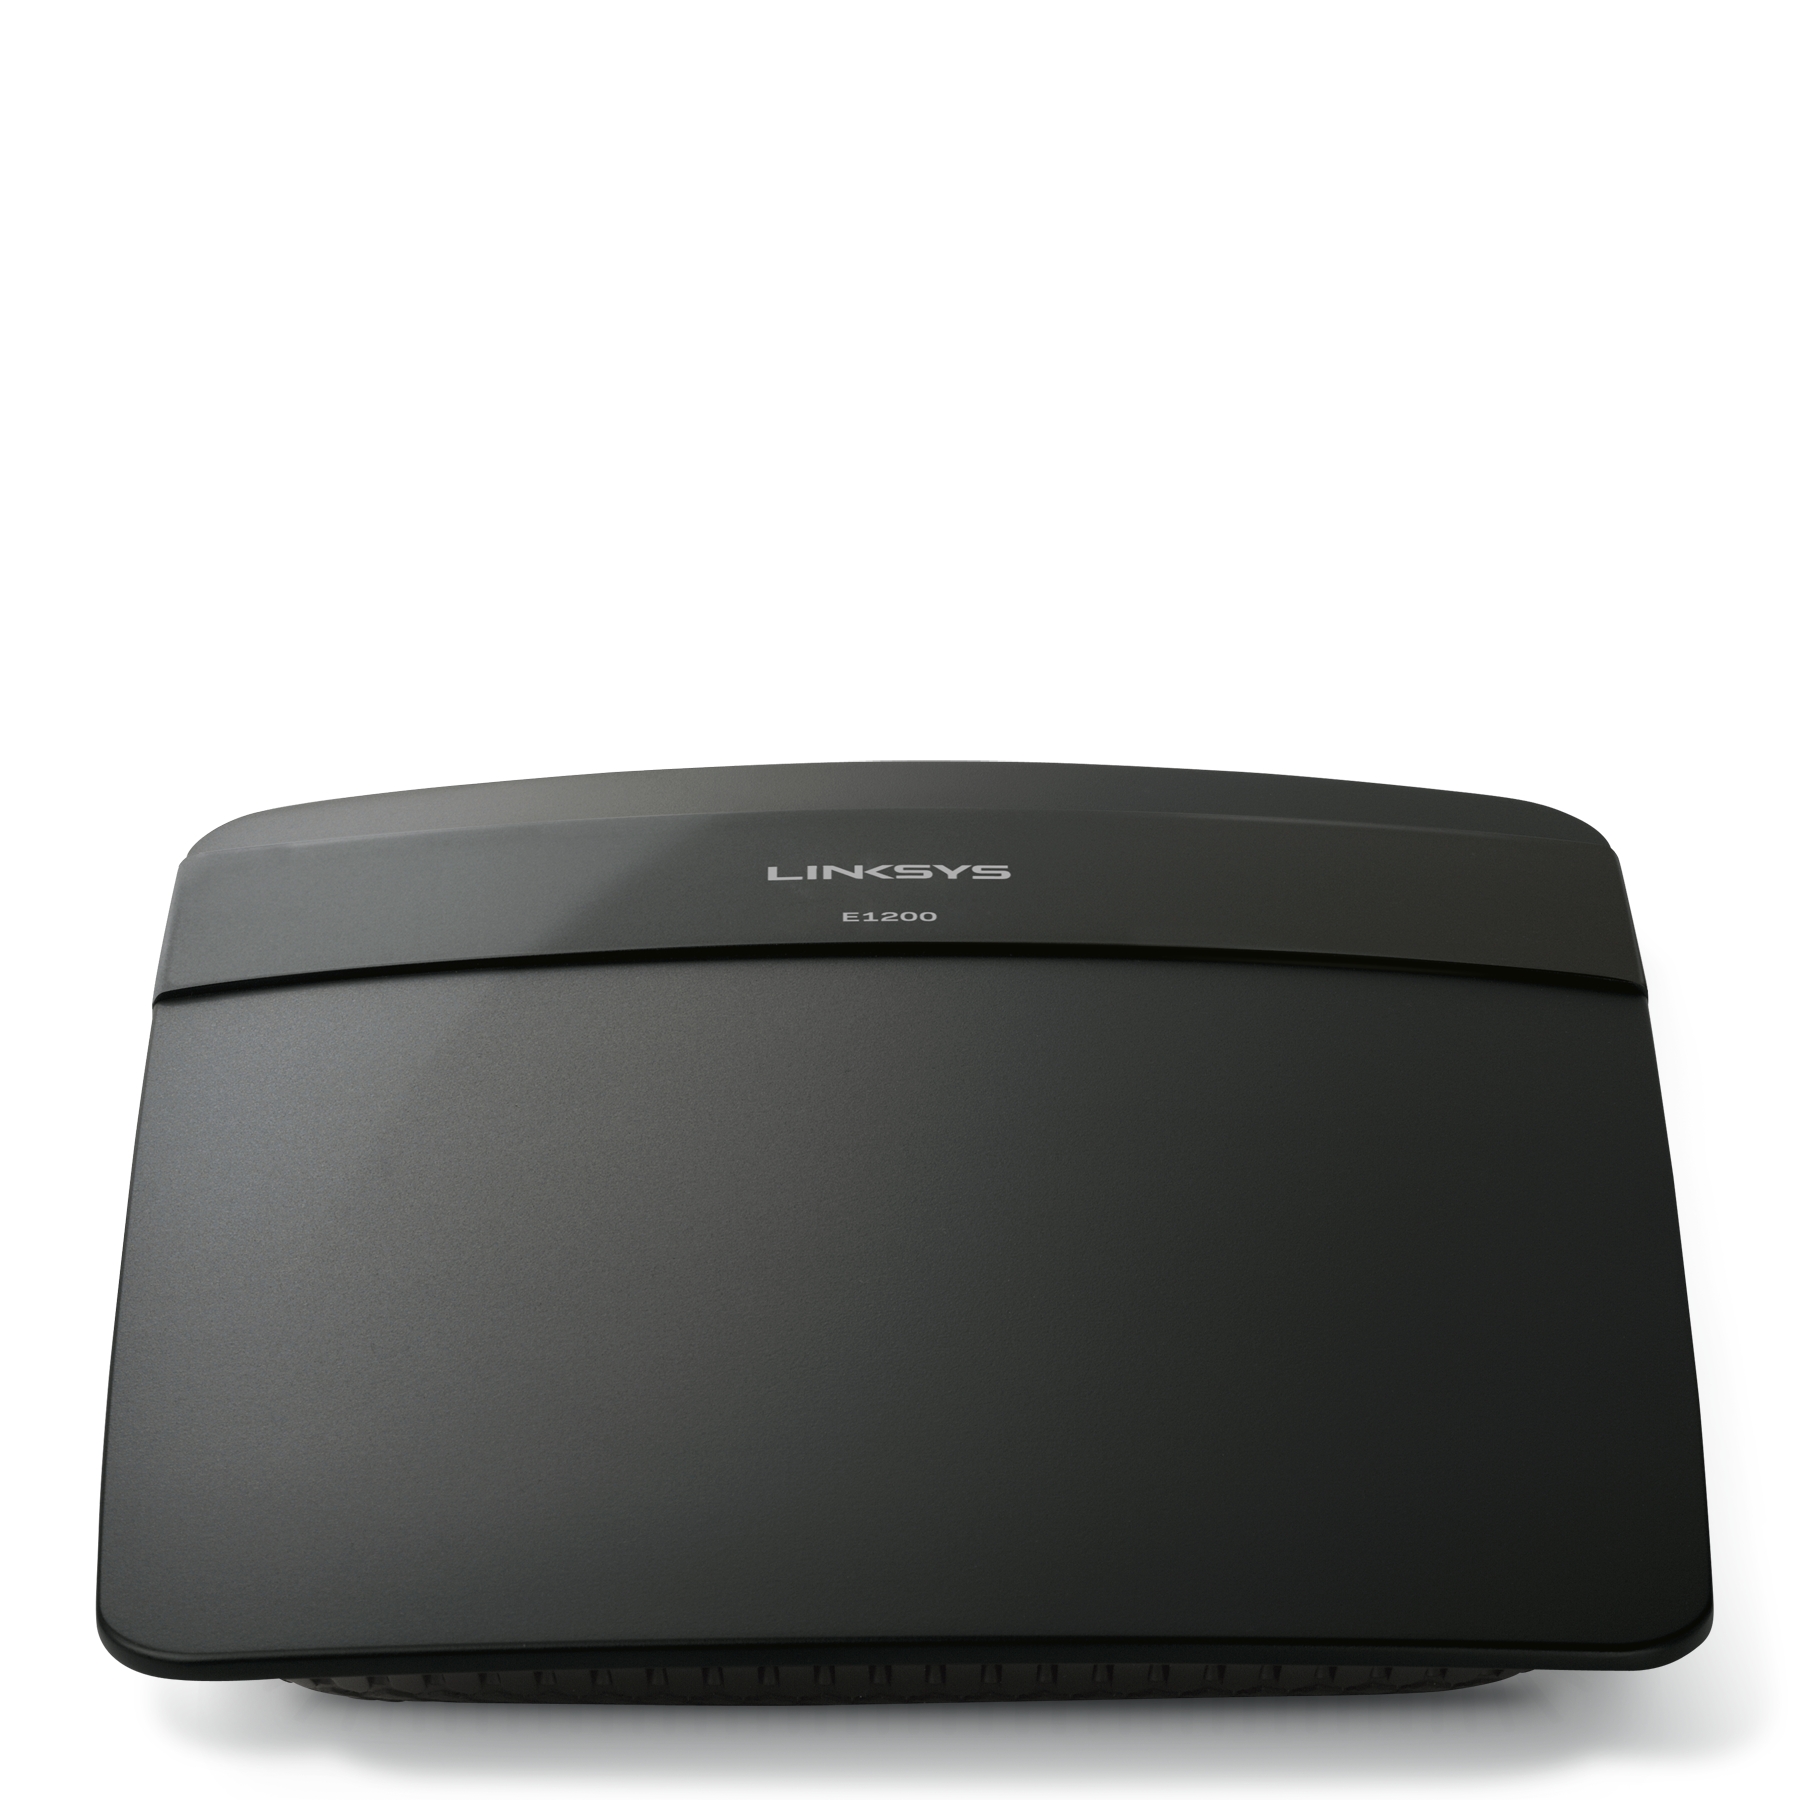 Linksys E1200 Wireless N300 Router | Surovi Enterprise Ltd.